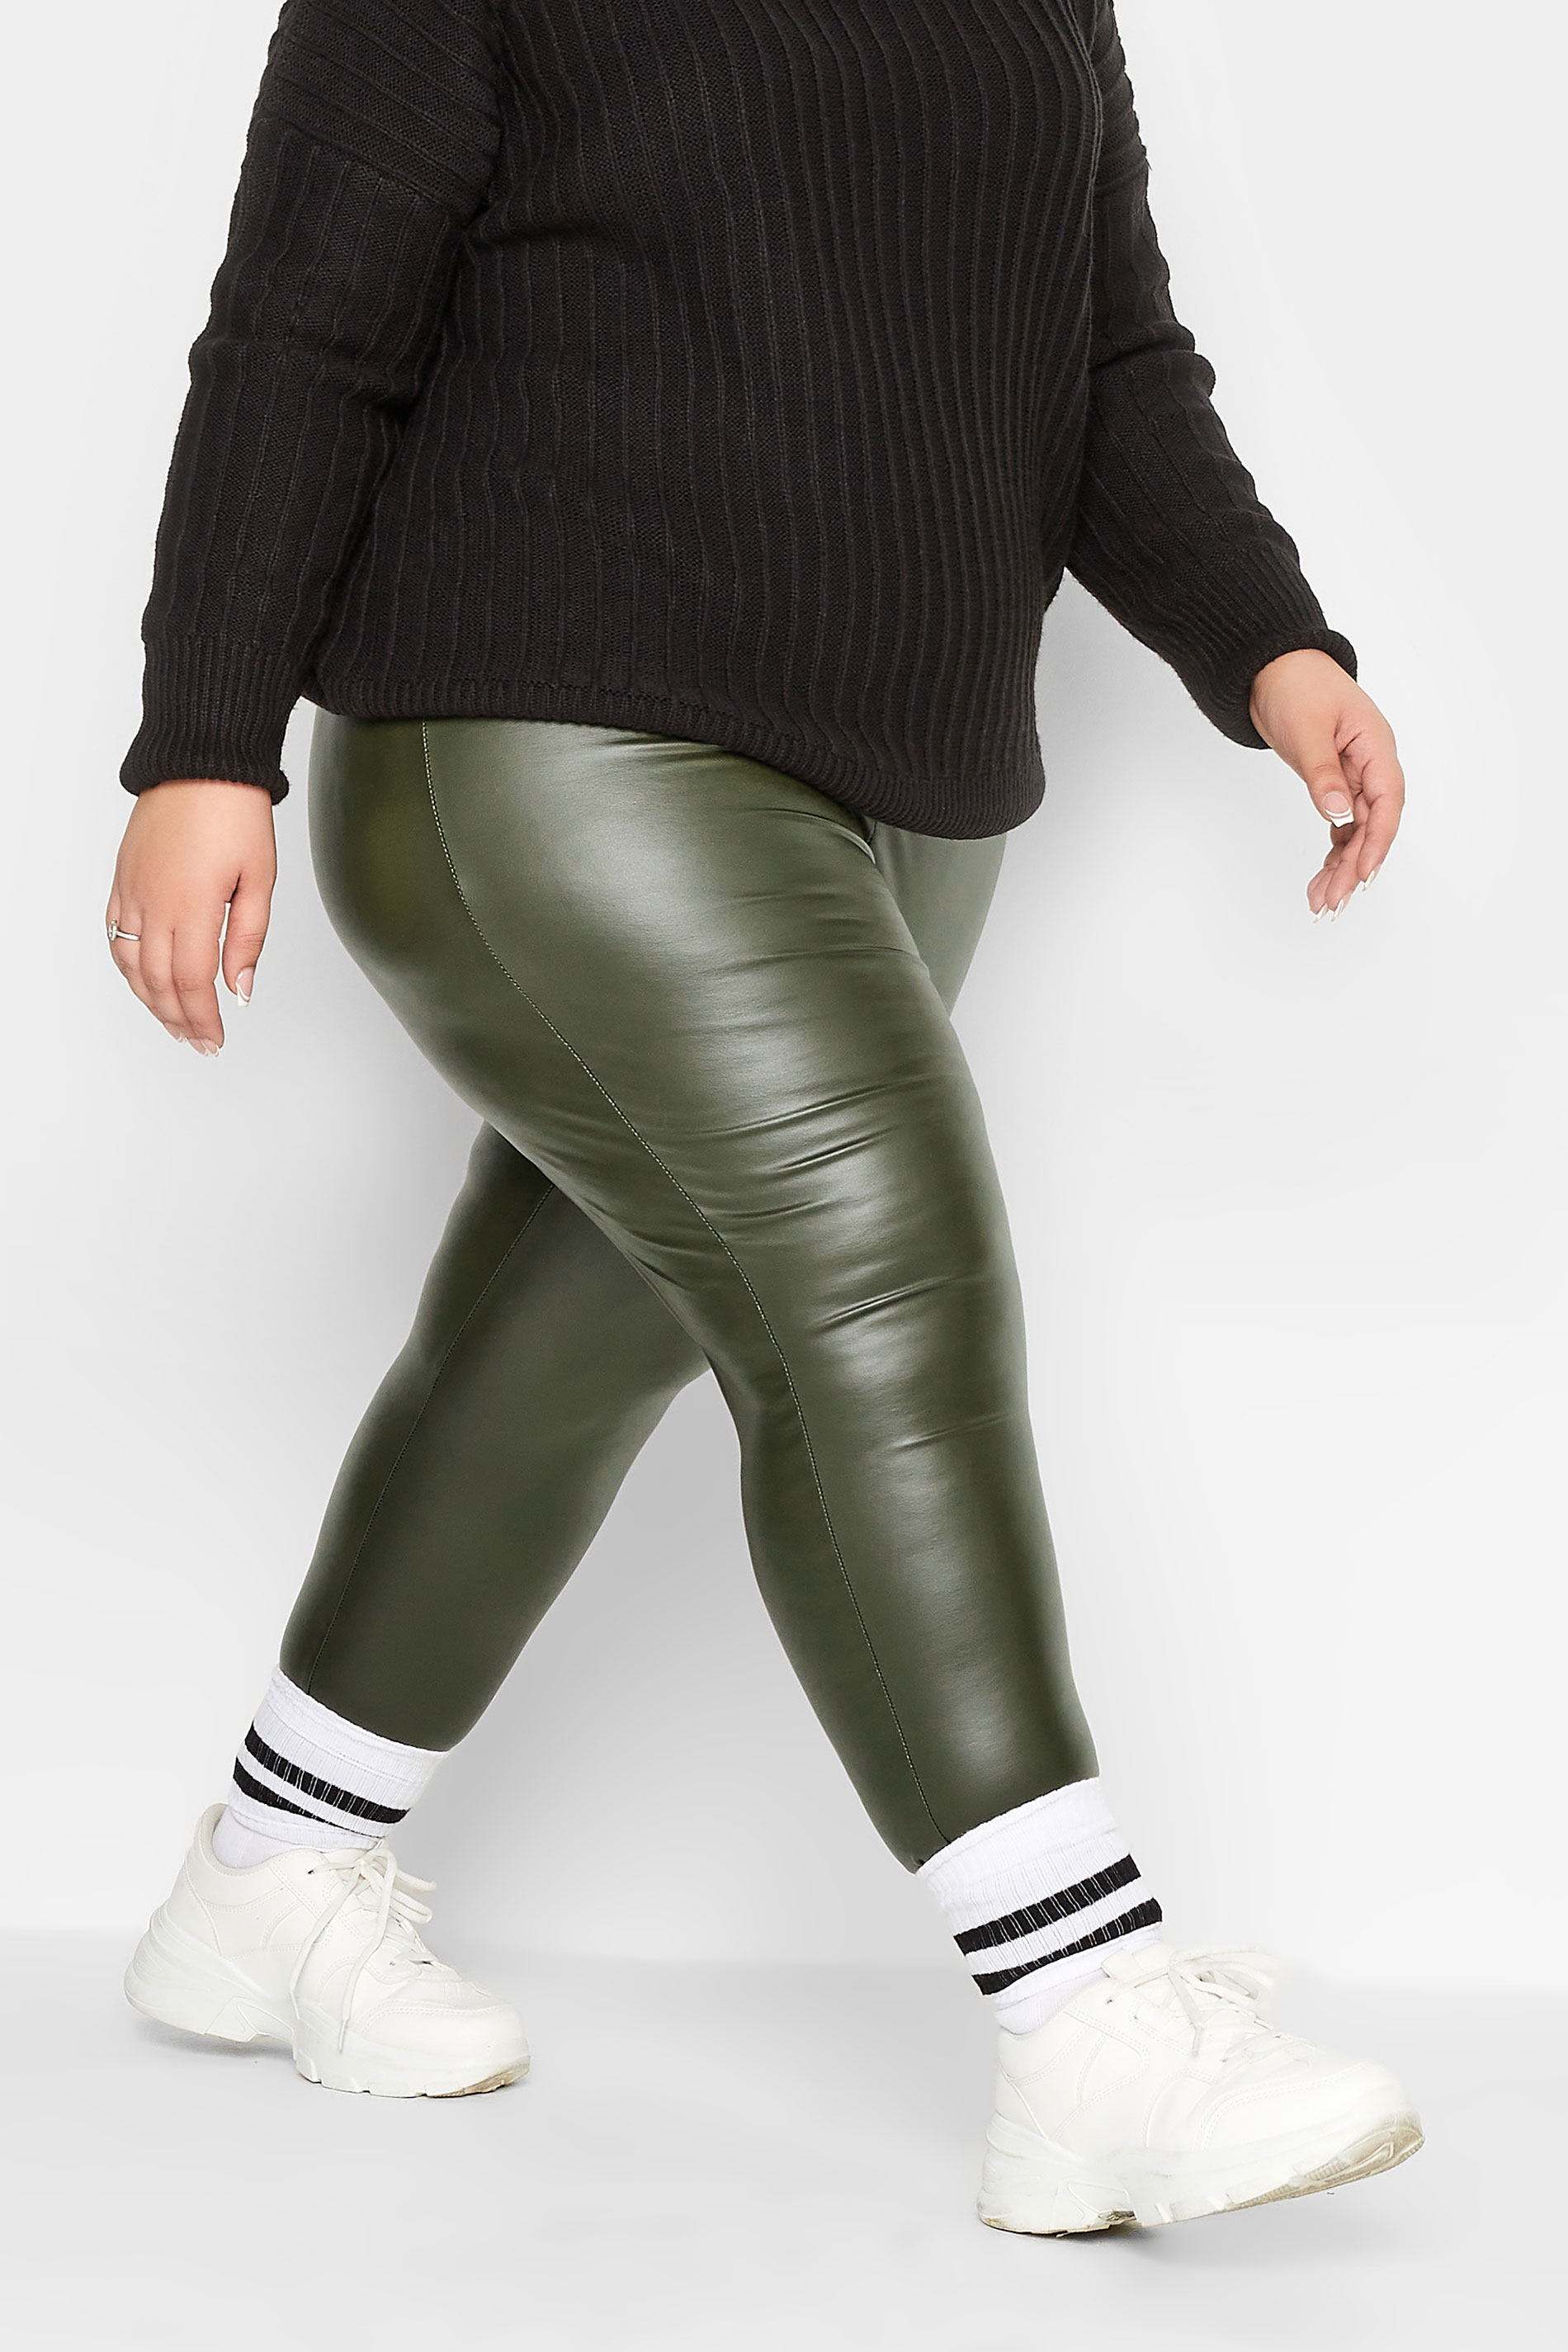 Petite Womens Khaki Green Stretch Leather Leggings | PixieGirl 1